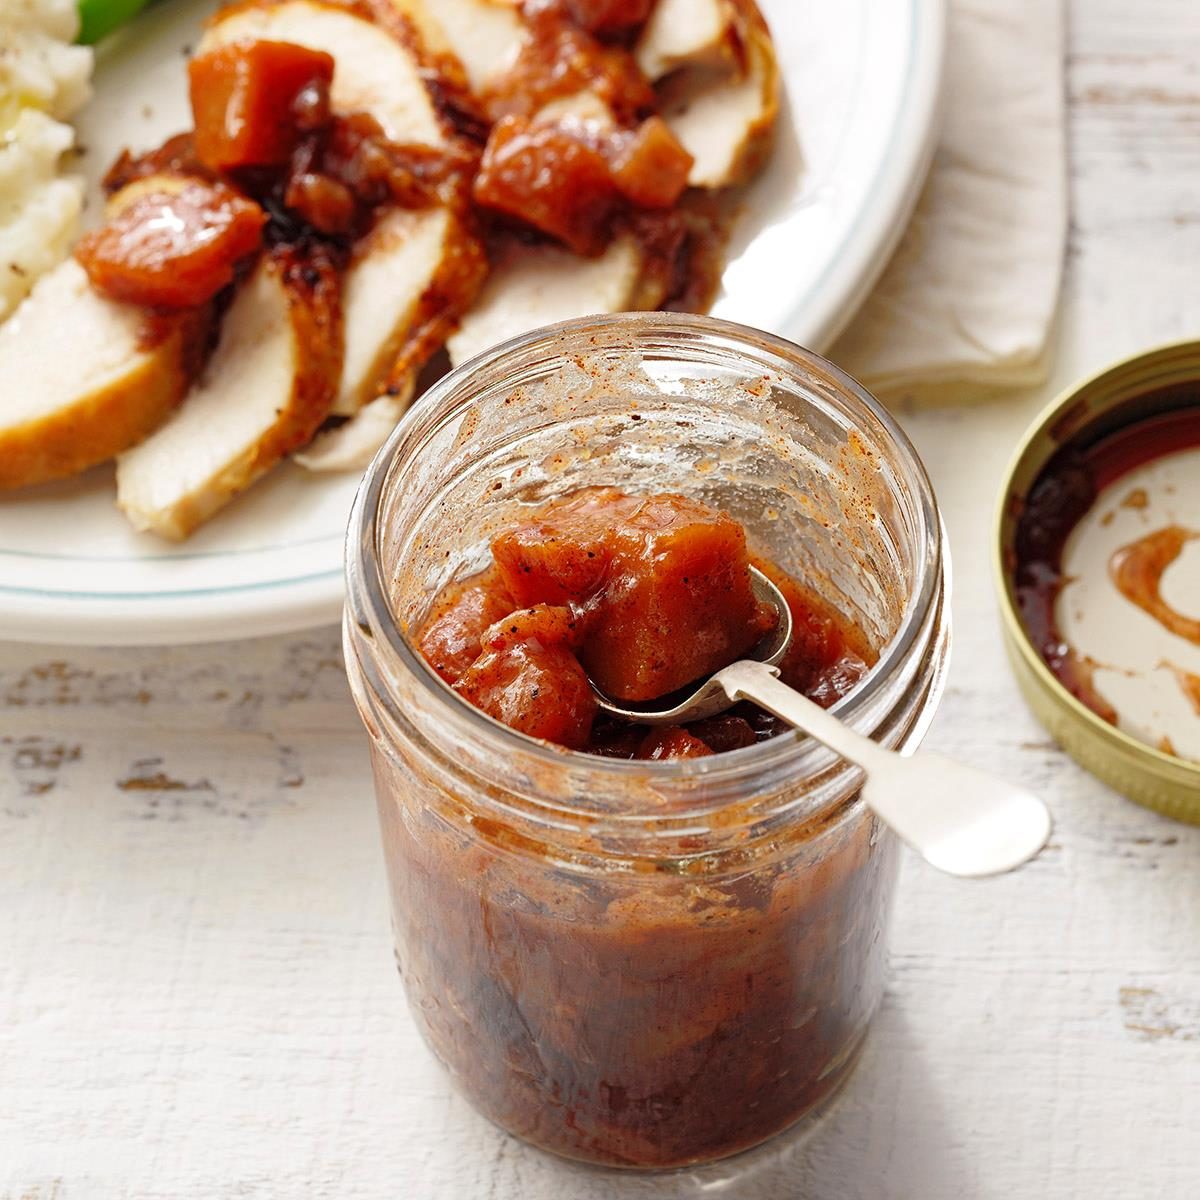 Orange Cranberry Chutney Recipe: How to Make It